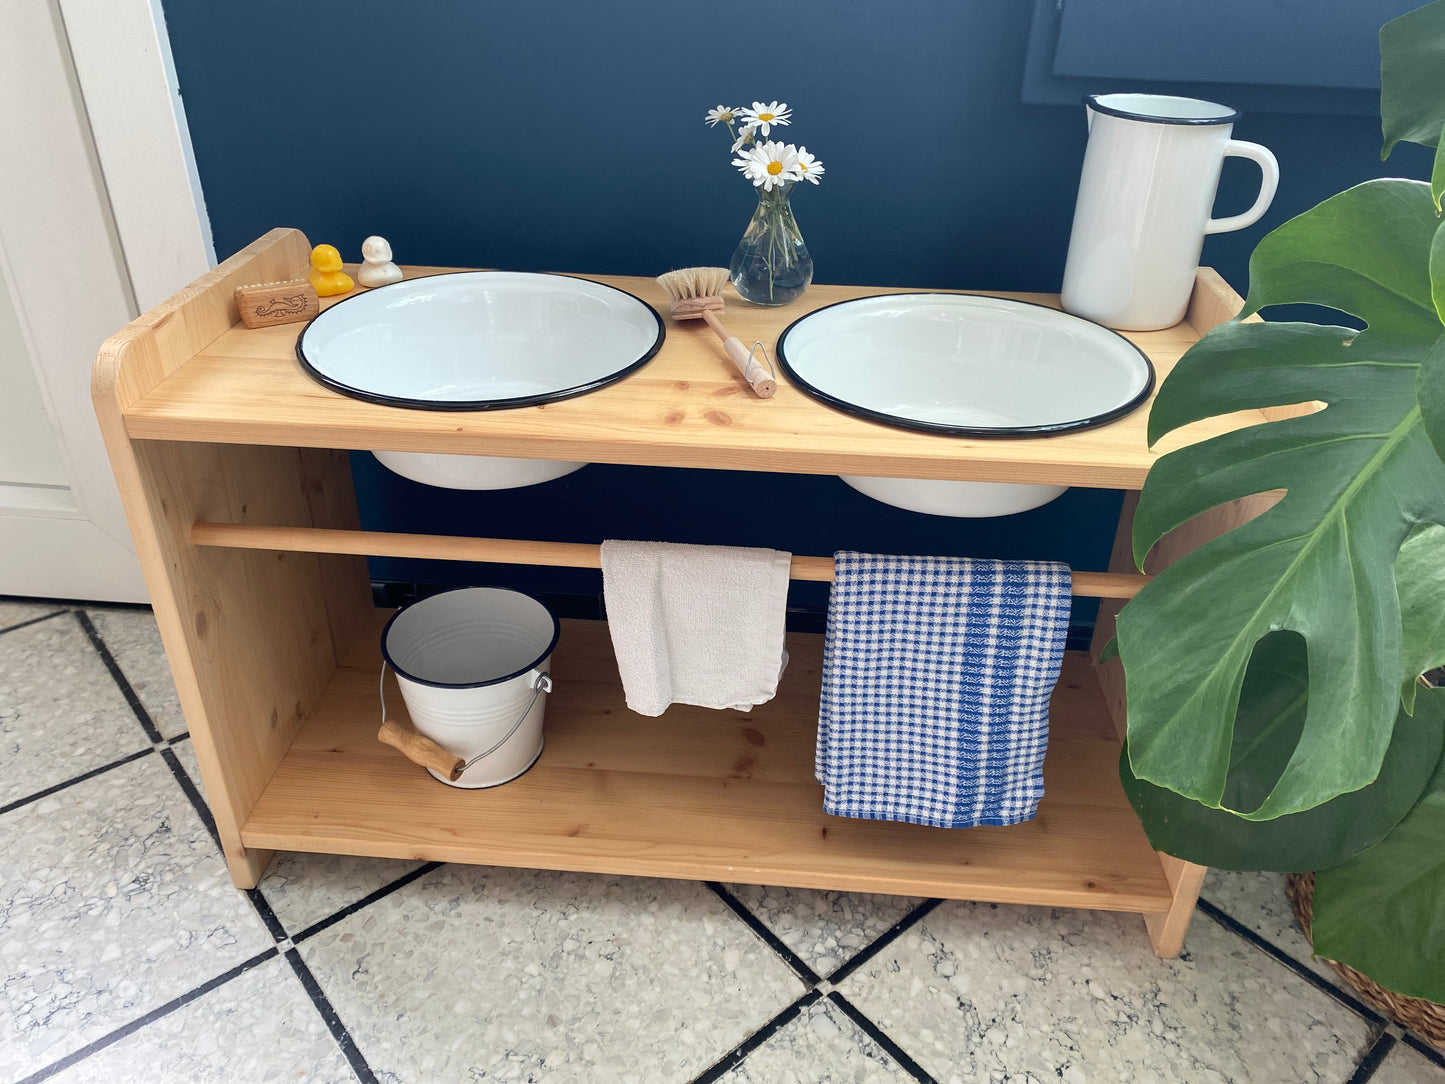 Manine Montessori Double Washing Station